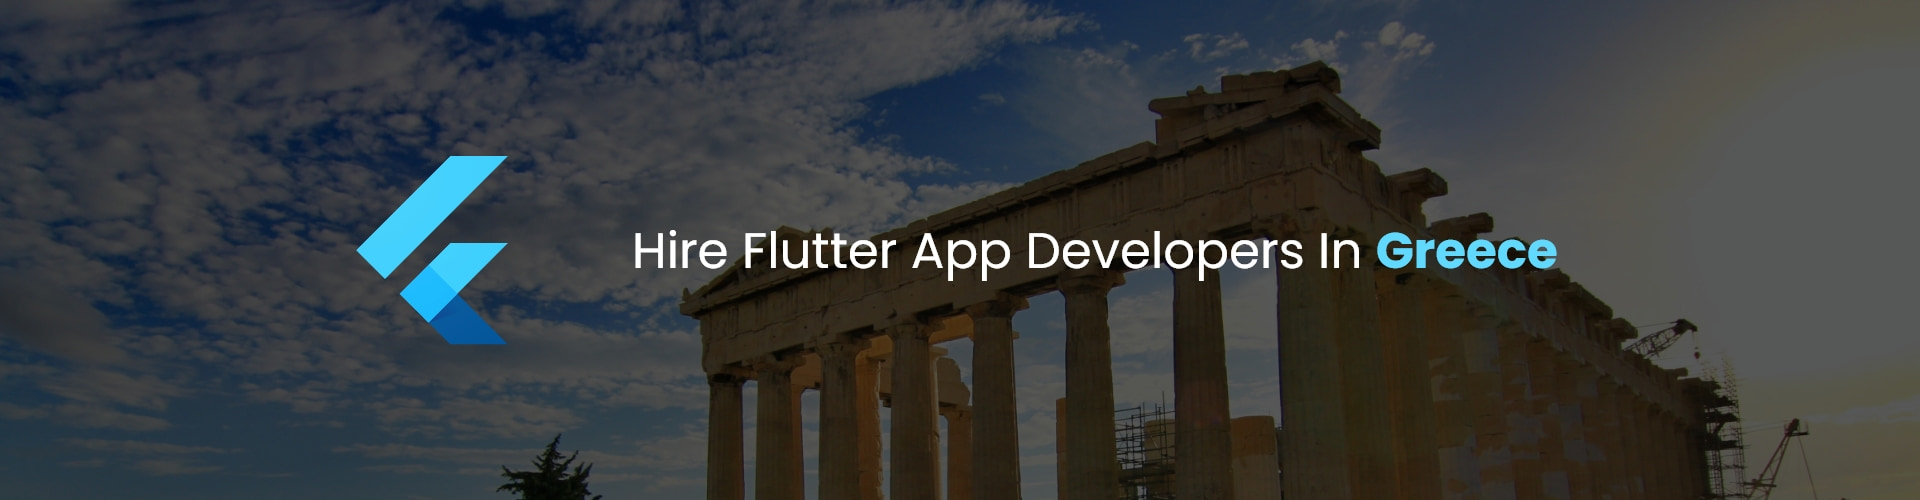 hire flutter app developers in greece